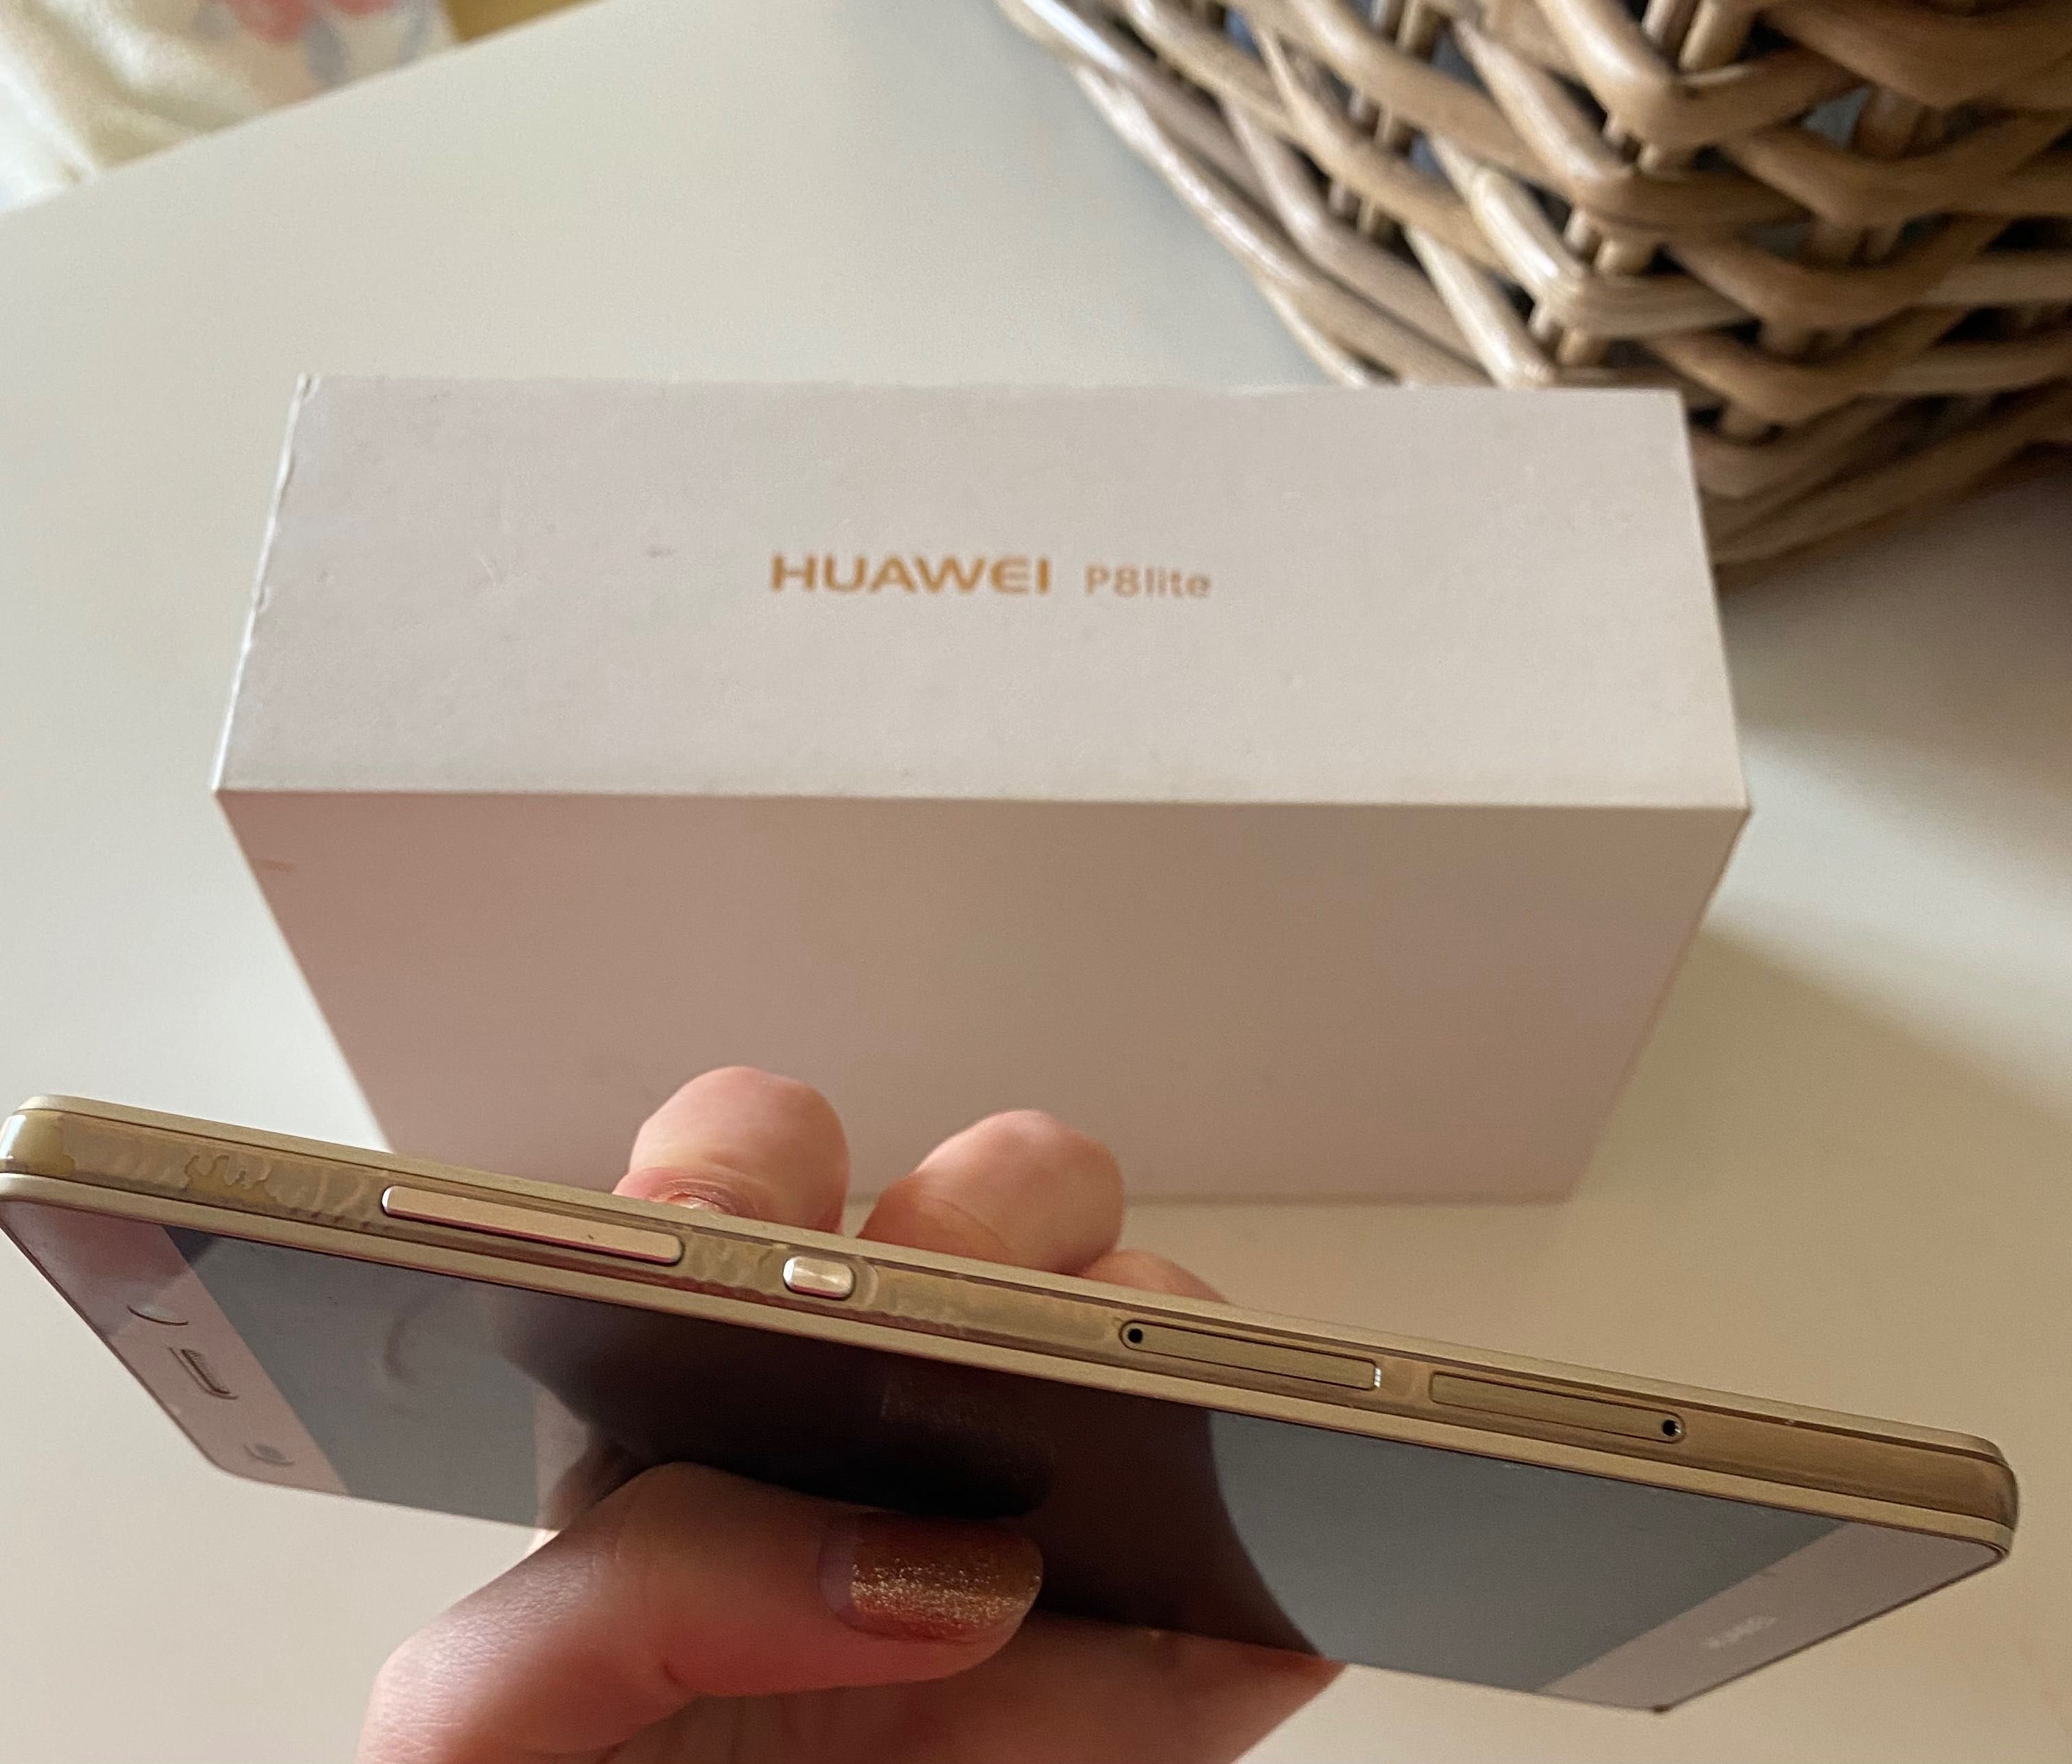 Huawei P8 lite dourado